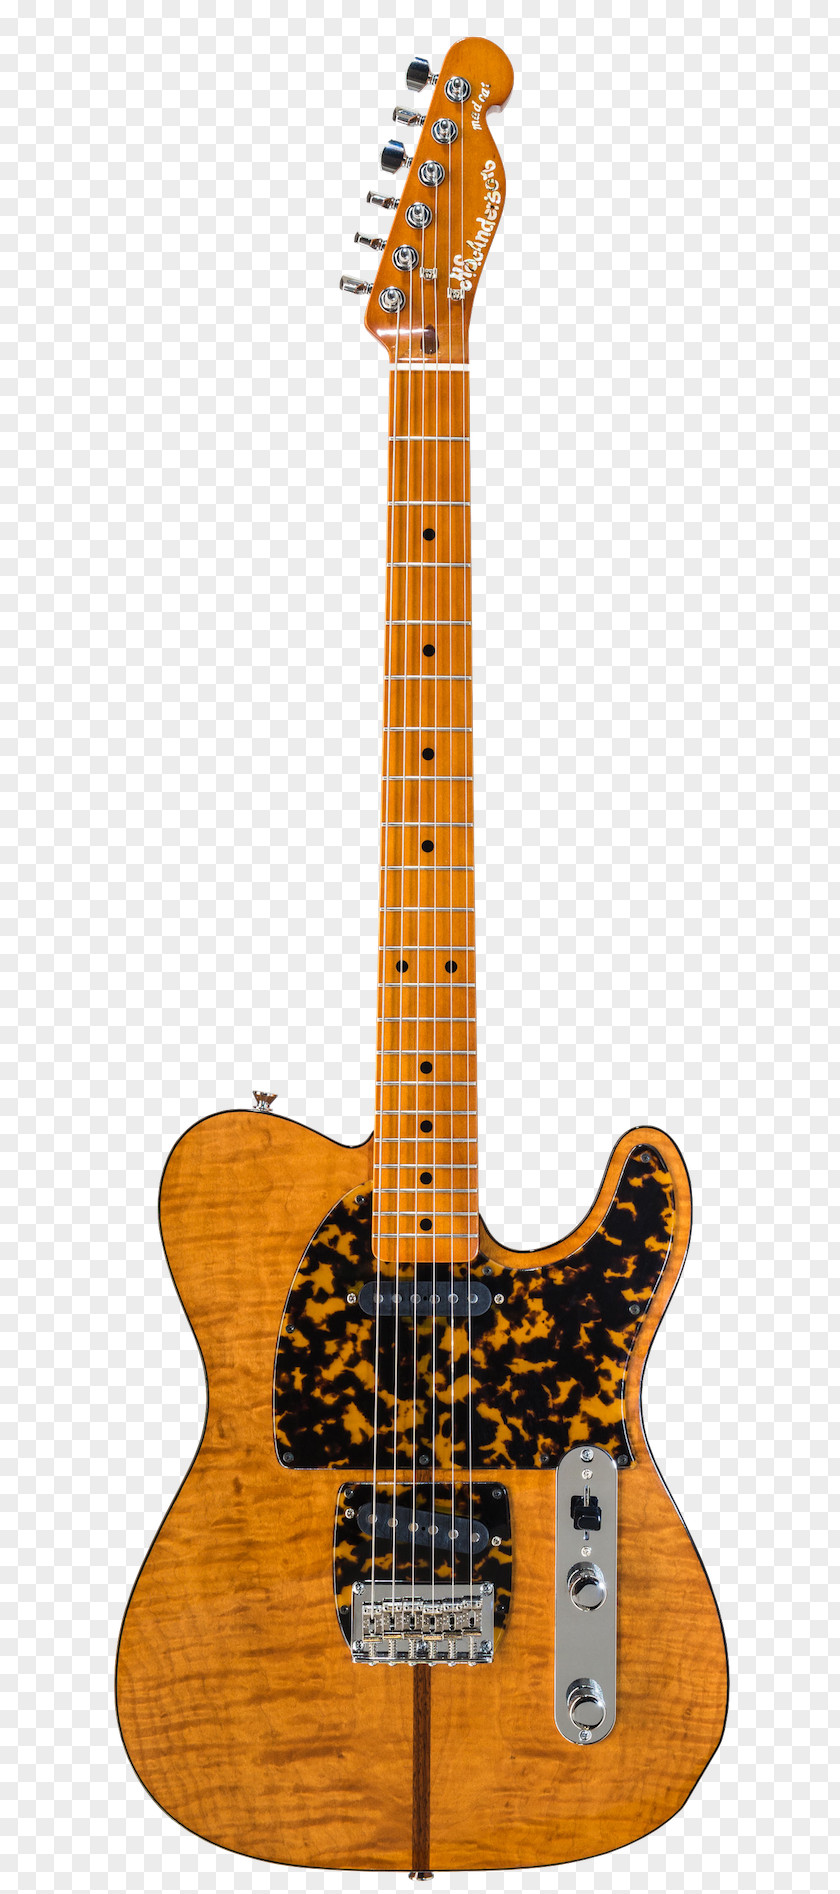 Musical Instruments Fender Telecaster Stratocaster Bass Guitar PNG